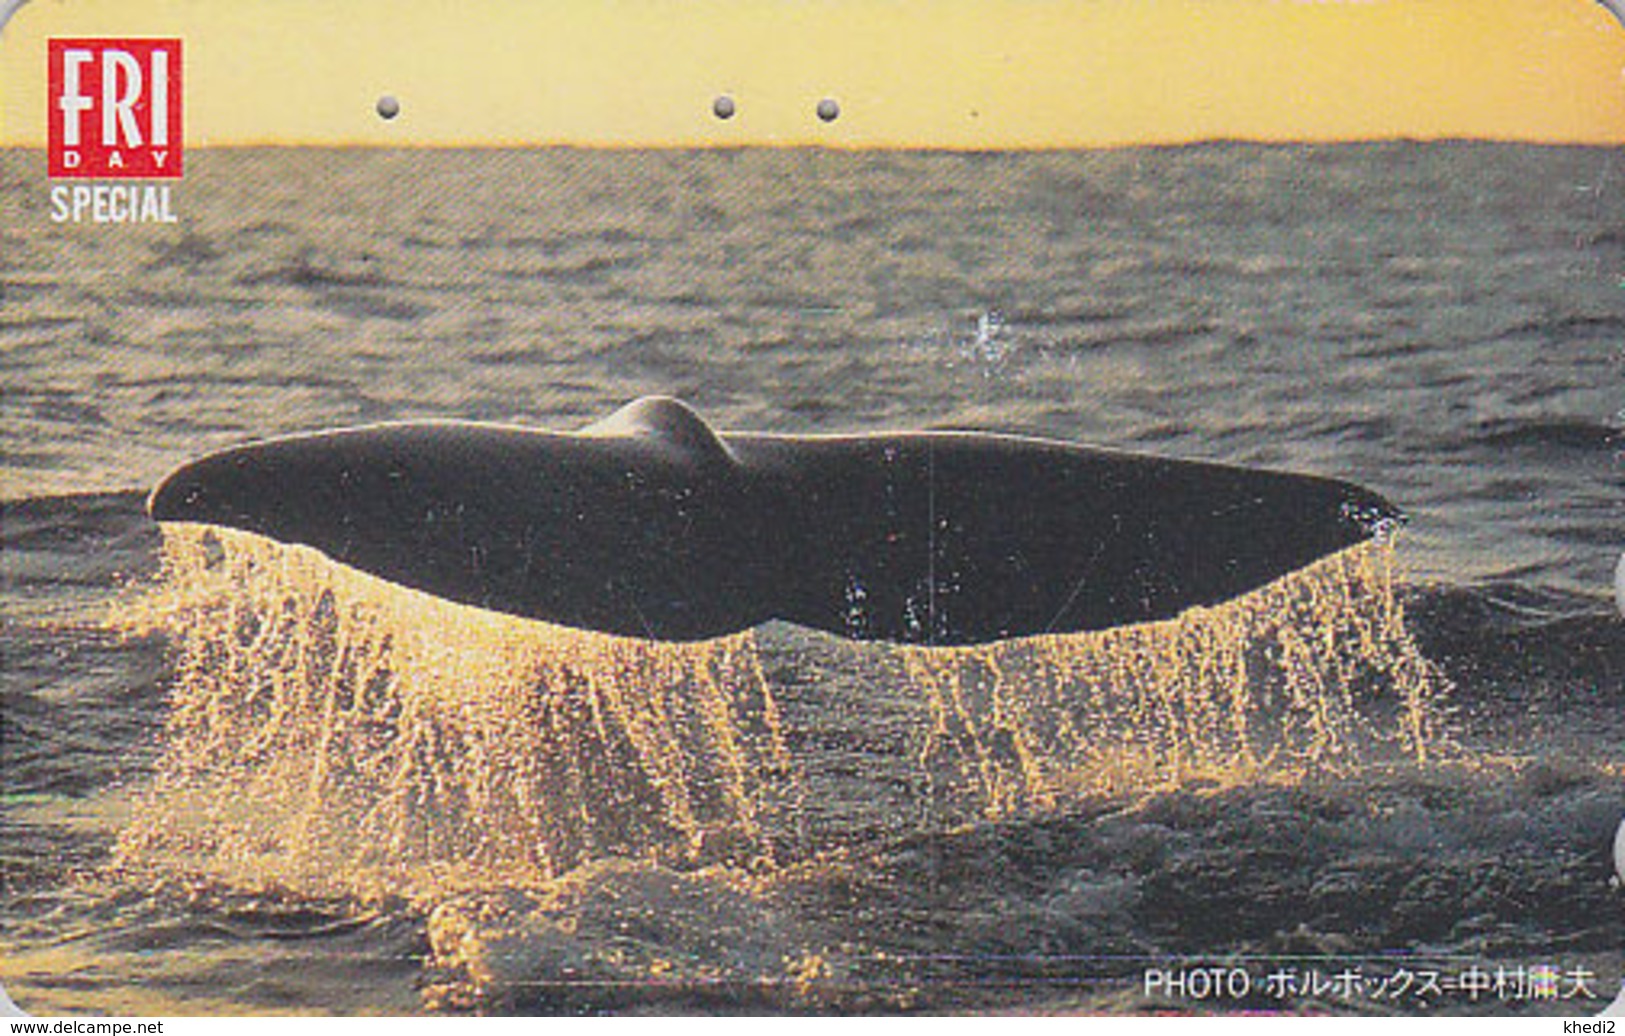 Télécarte Japon  110-011 - ANIMAL - BALEINE / FRI SPECIAL - WHALE Japan Phonecard - WAL TK - BALLENA / Queue - 365 - Dolfijnen